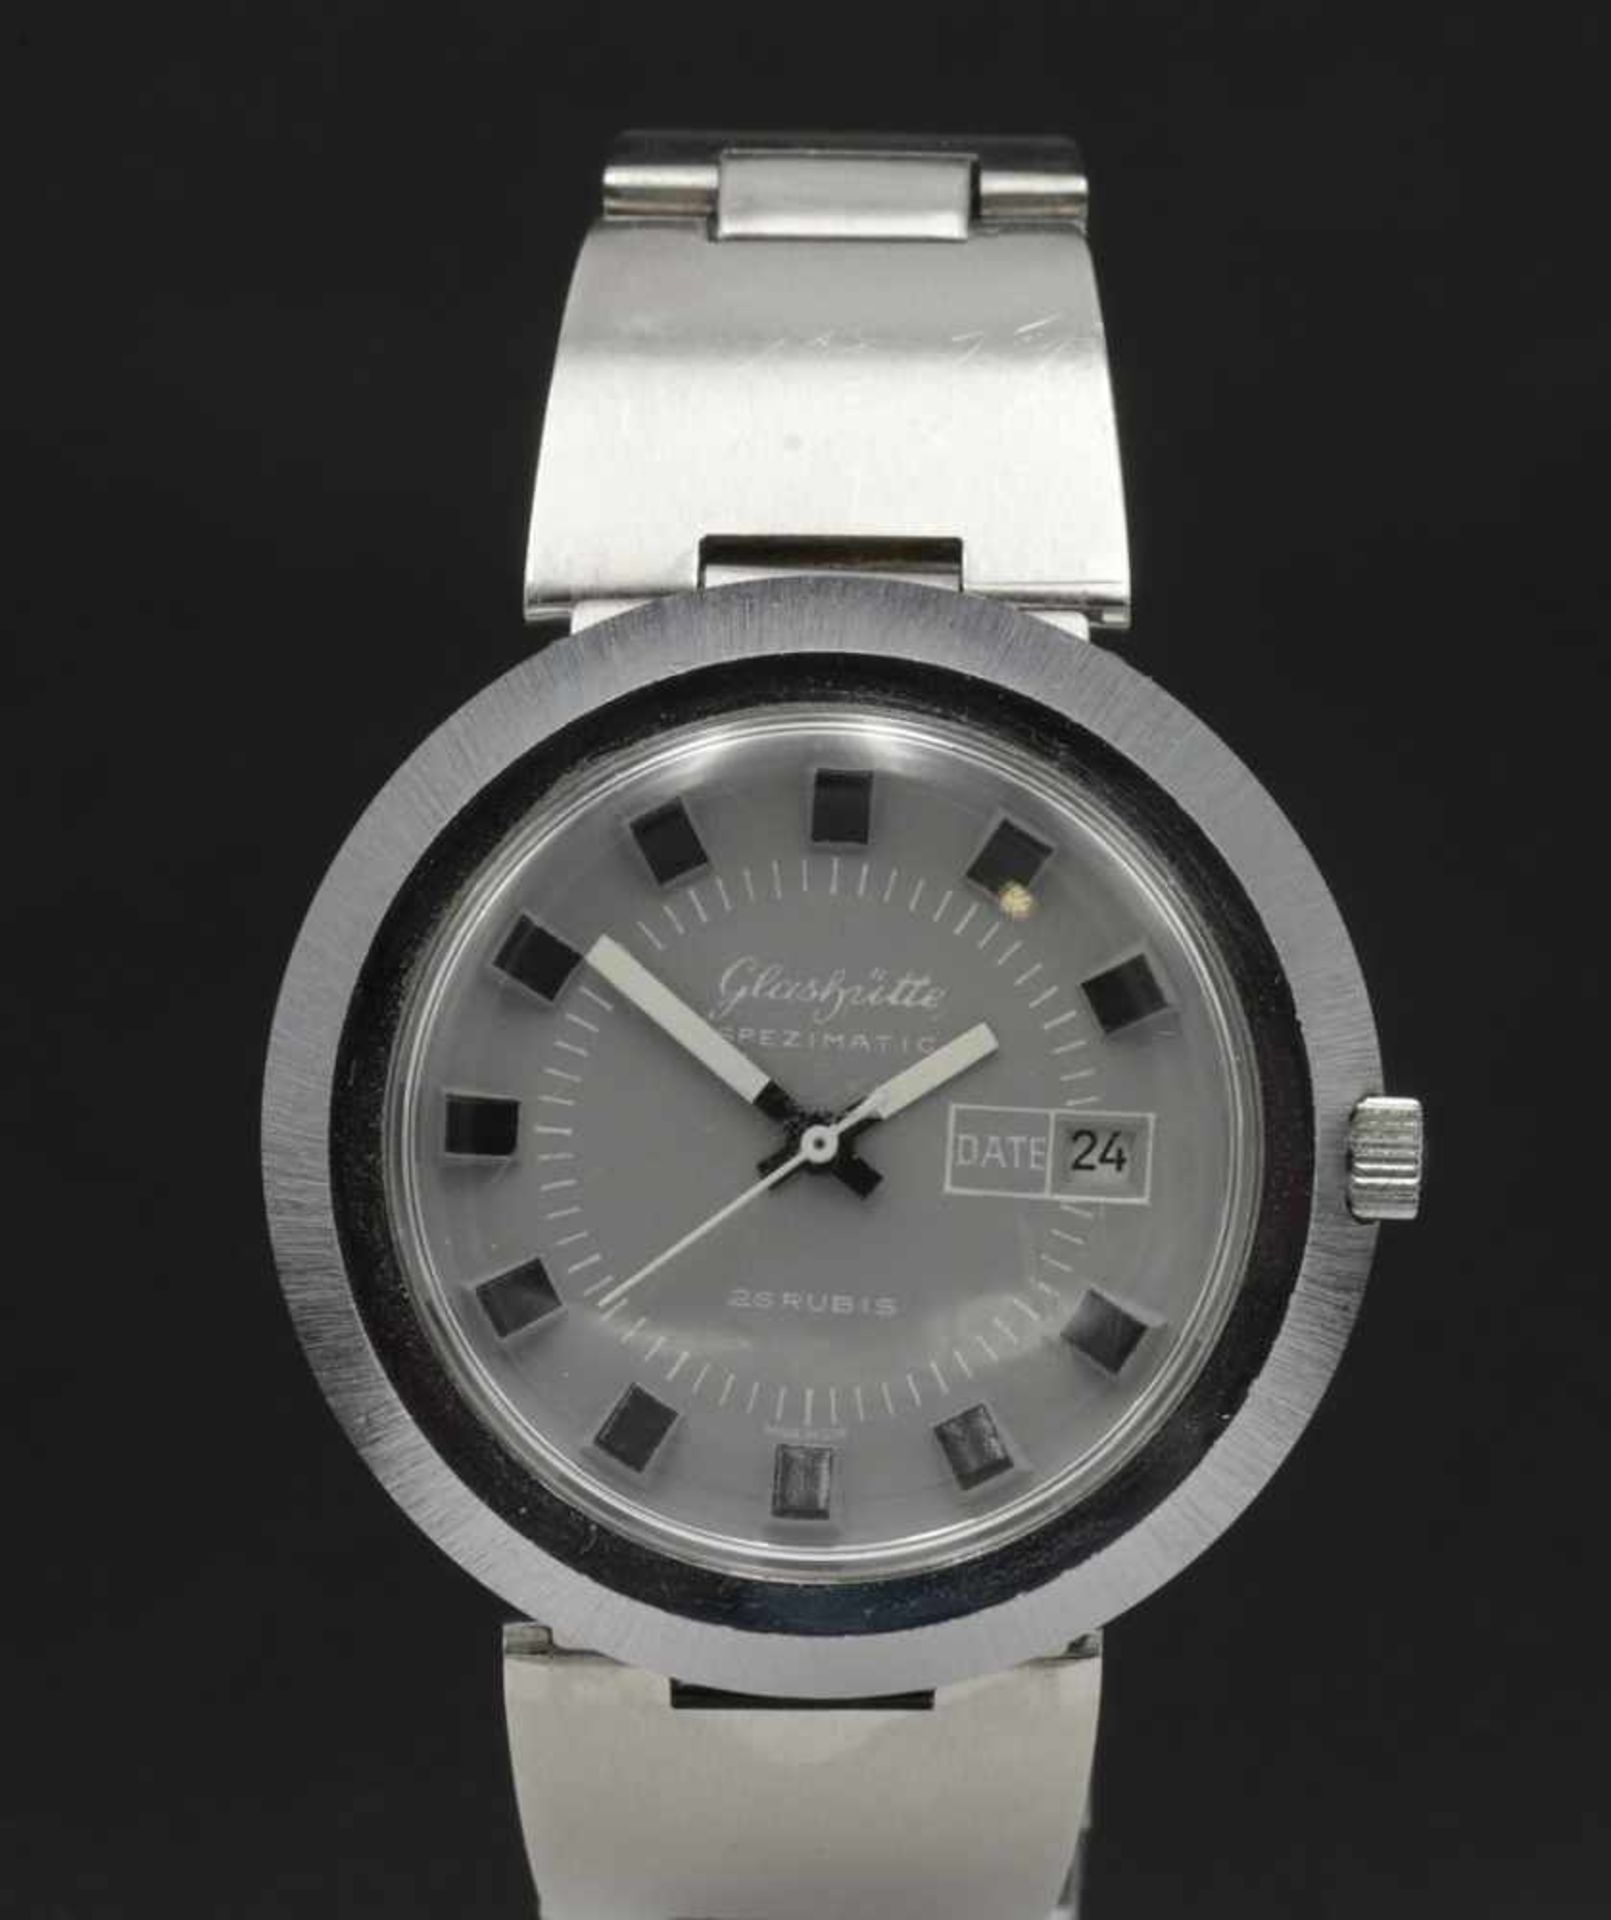 Glashütte Spezimatic vintage Armbanduhr, um 1960 - Bild 2 aus 3